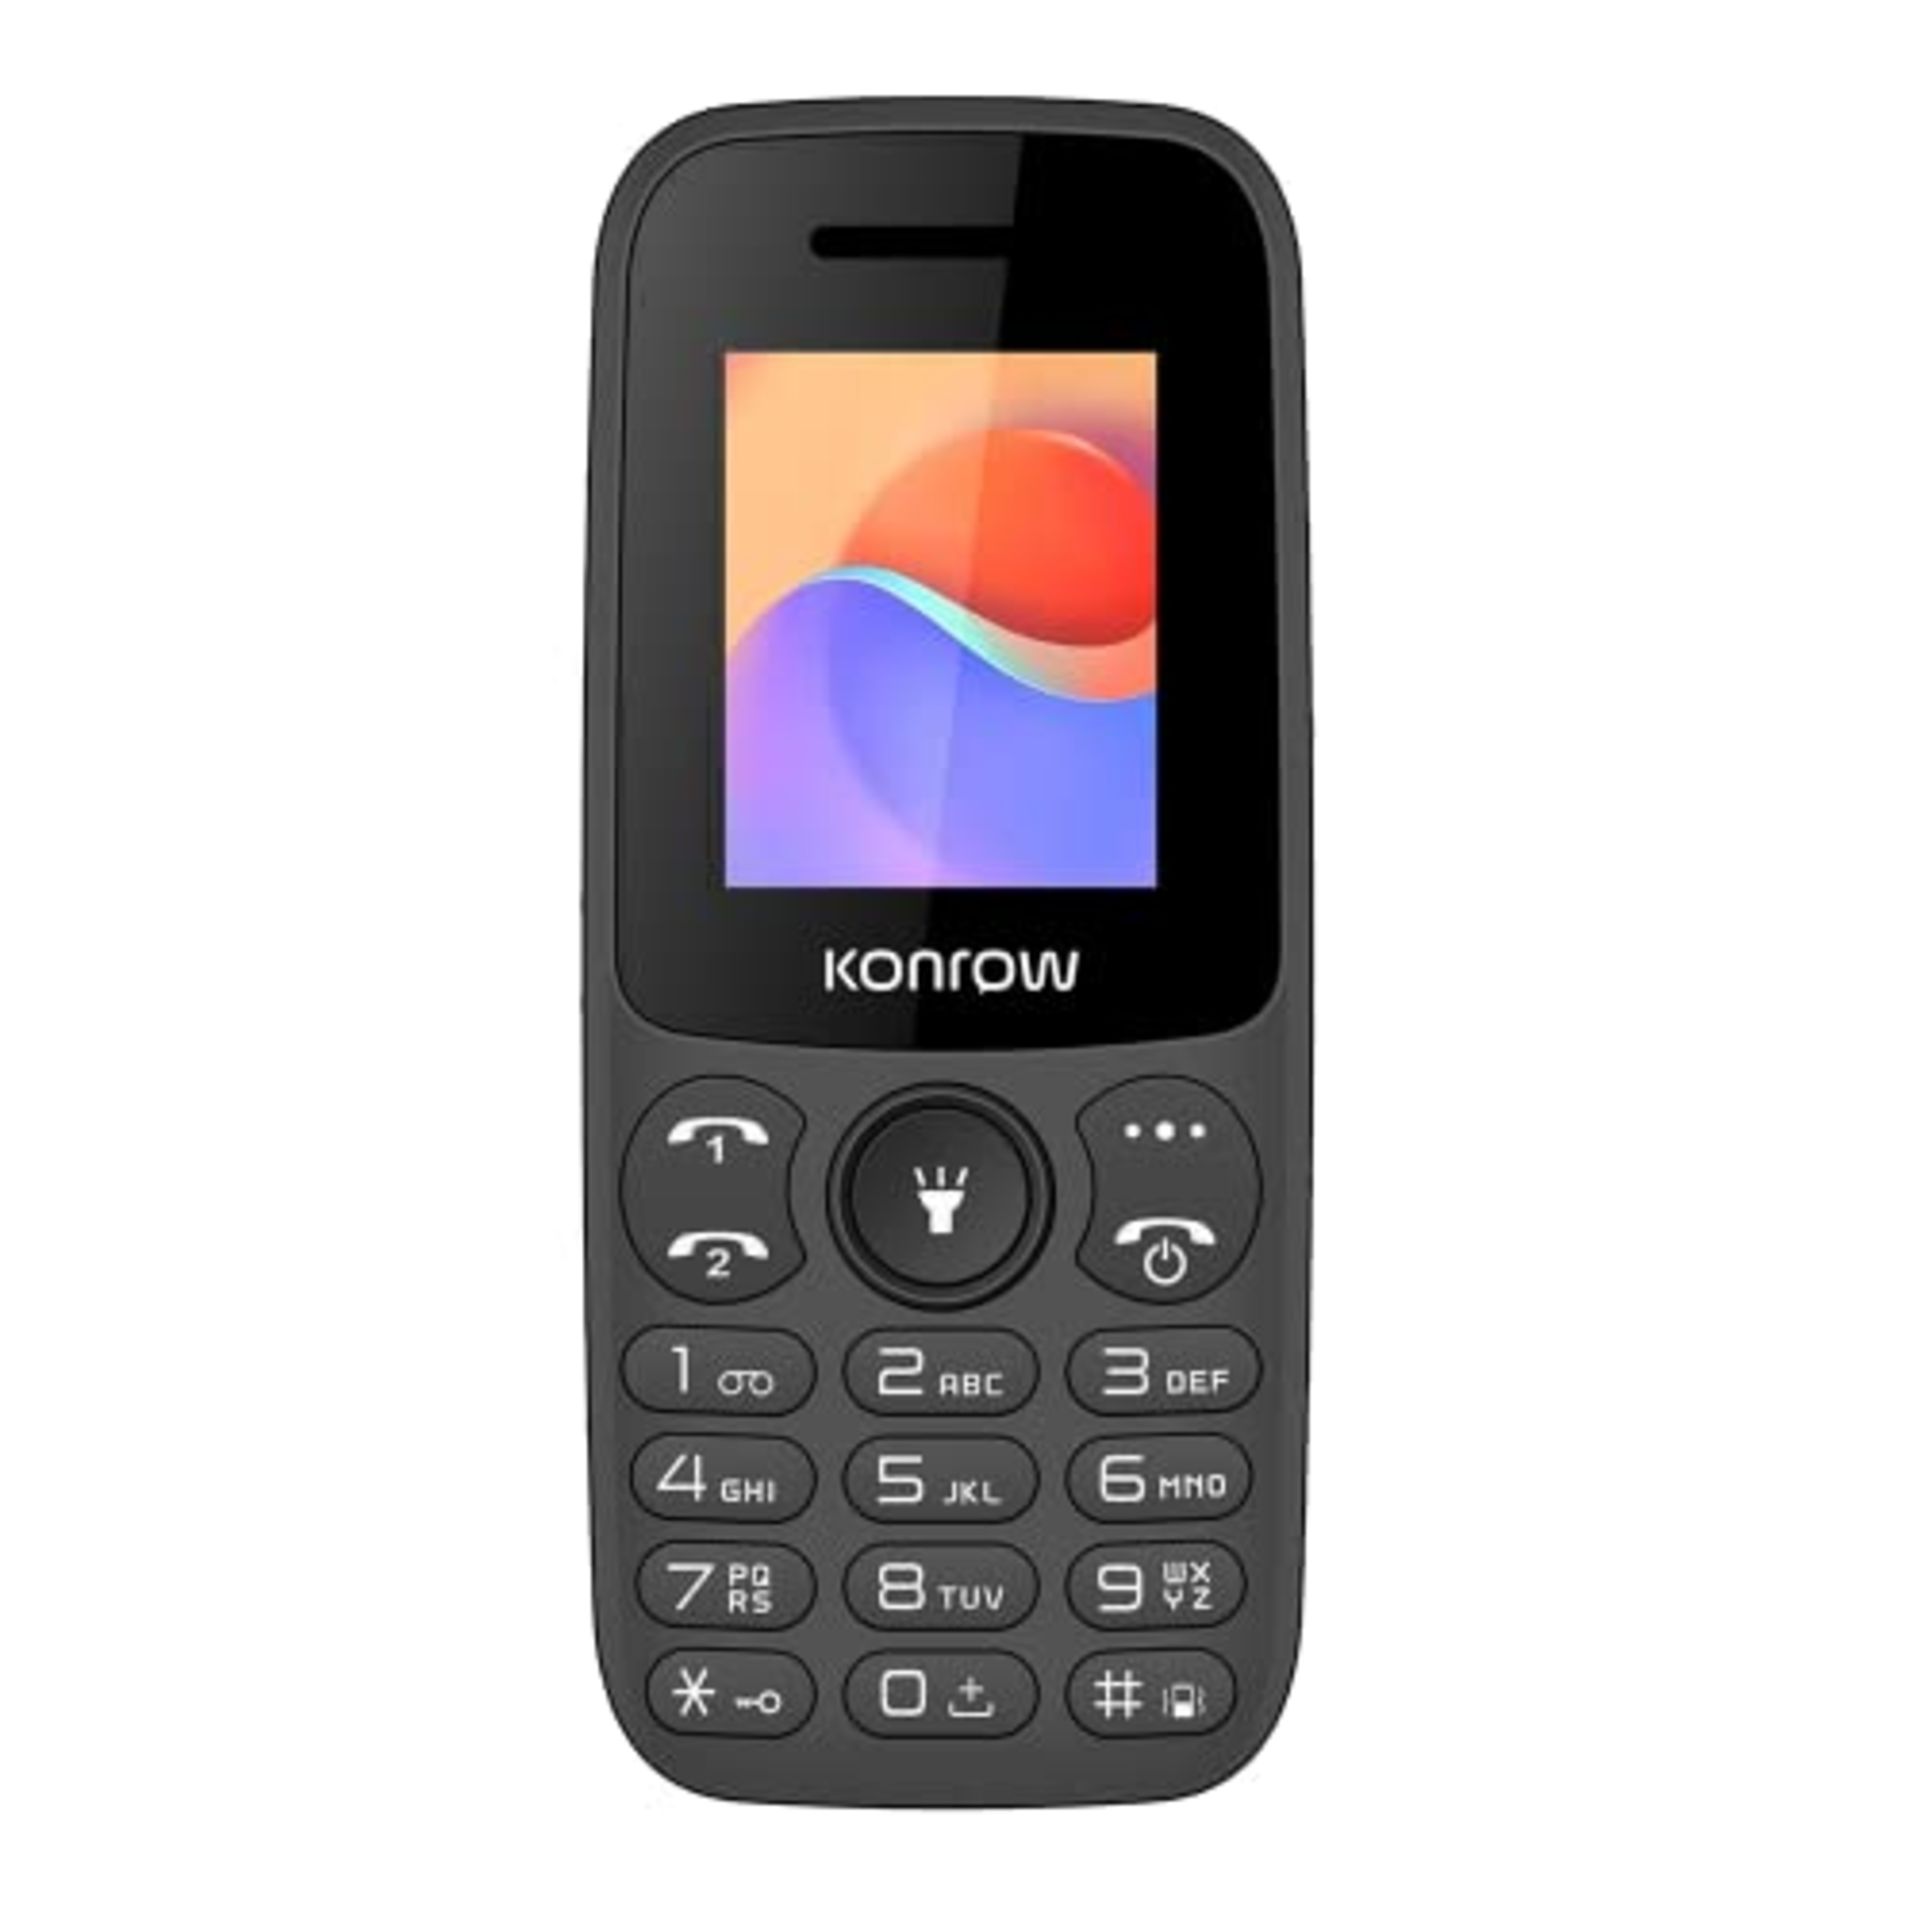 Konrow - Moby - 2G Dual SIM GSM Phone - 1.77" Screen, 32MB Expandable Memory, Bluetoot